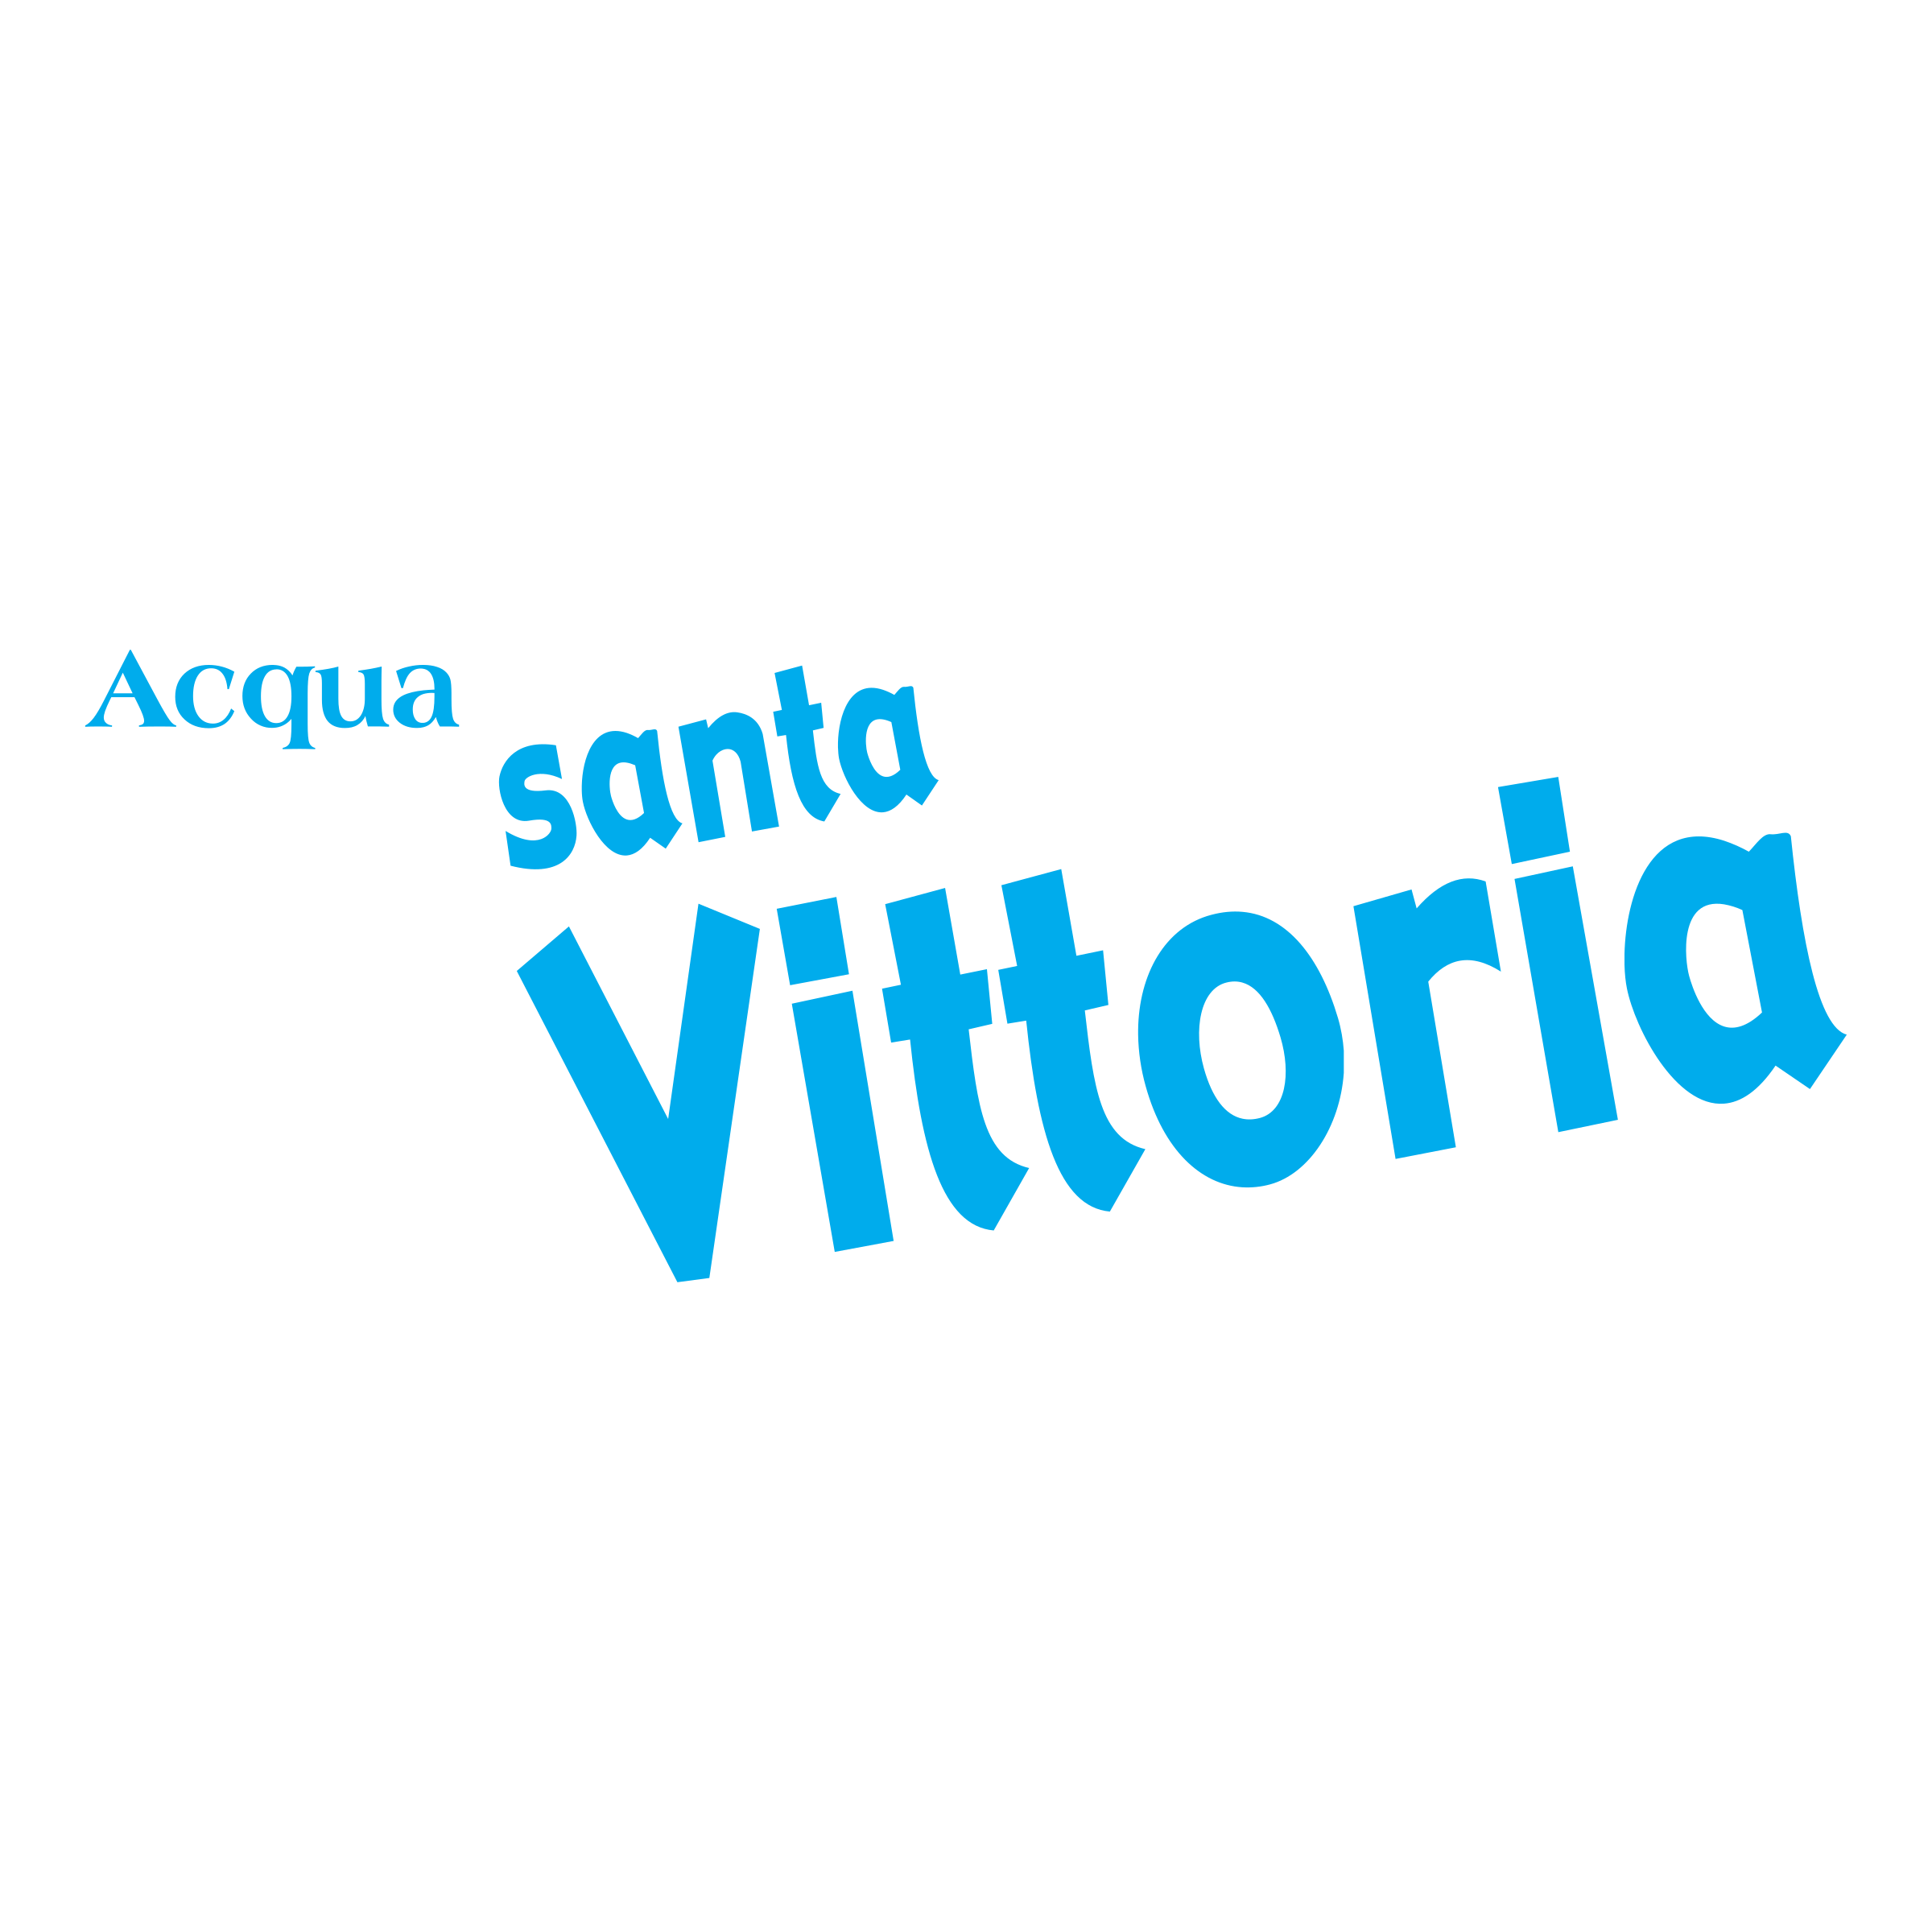 Vittoria Logo - Santa Vittoria Logo PNG Transparent & SVG Vector